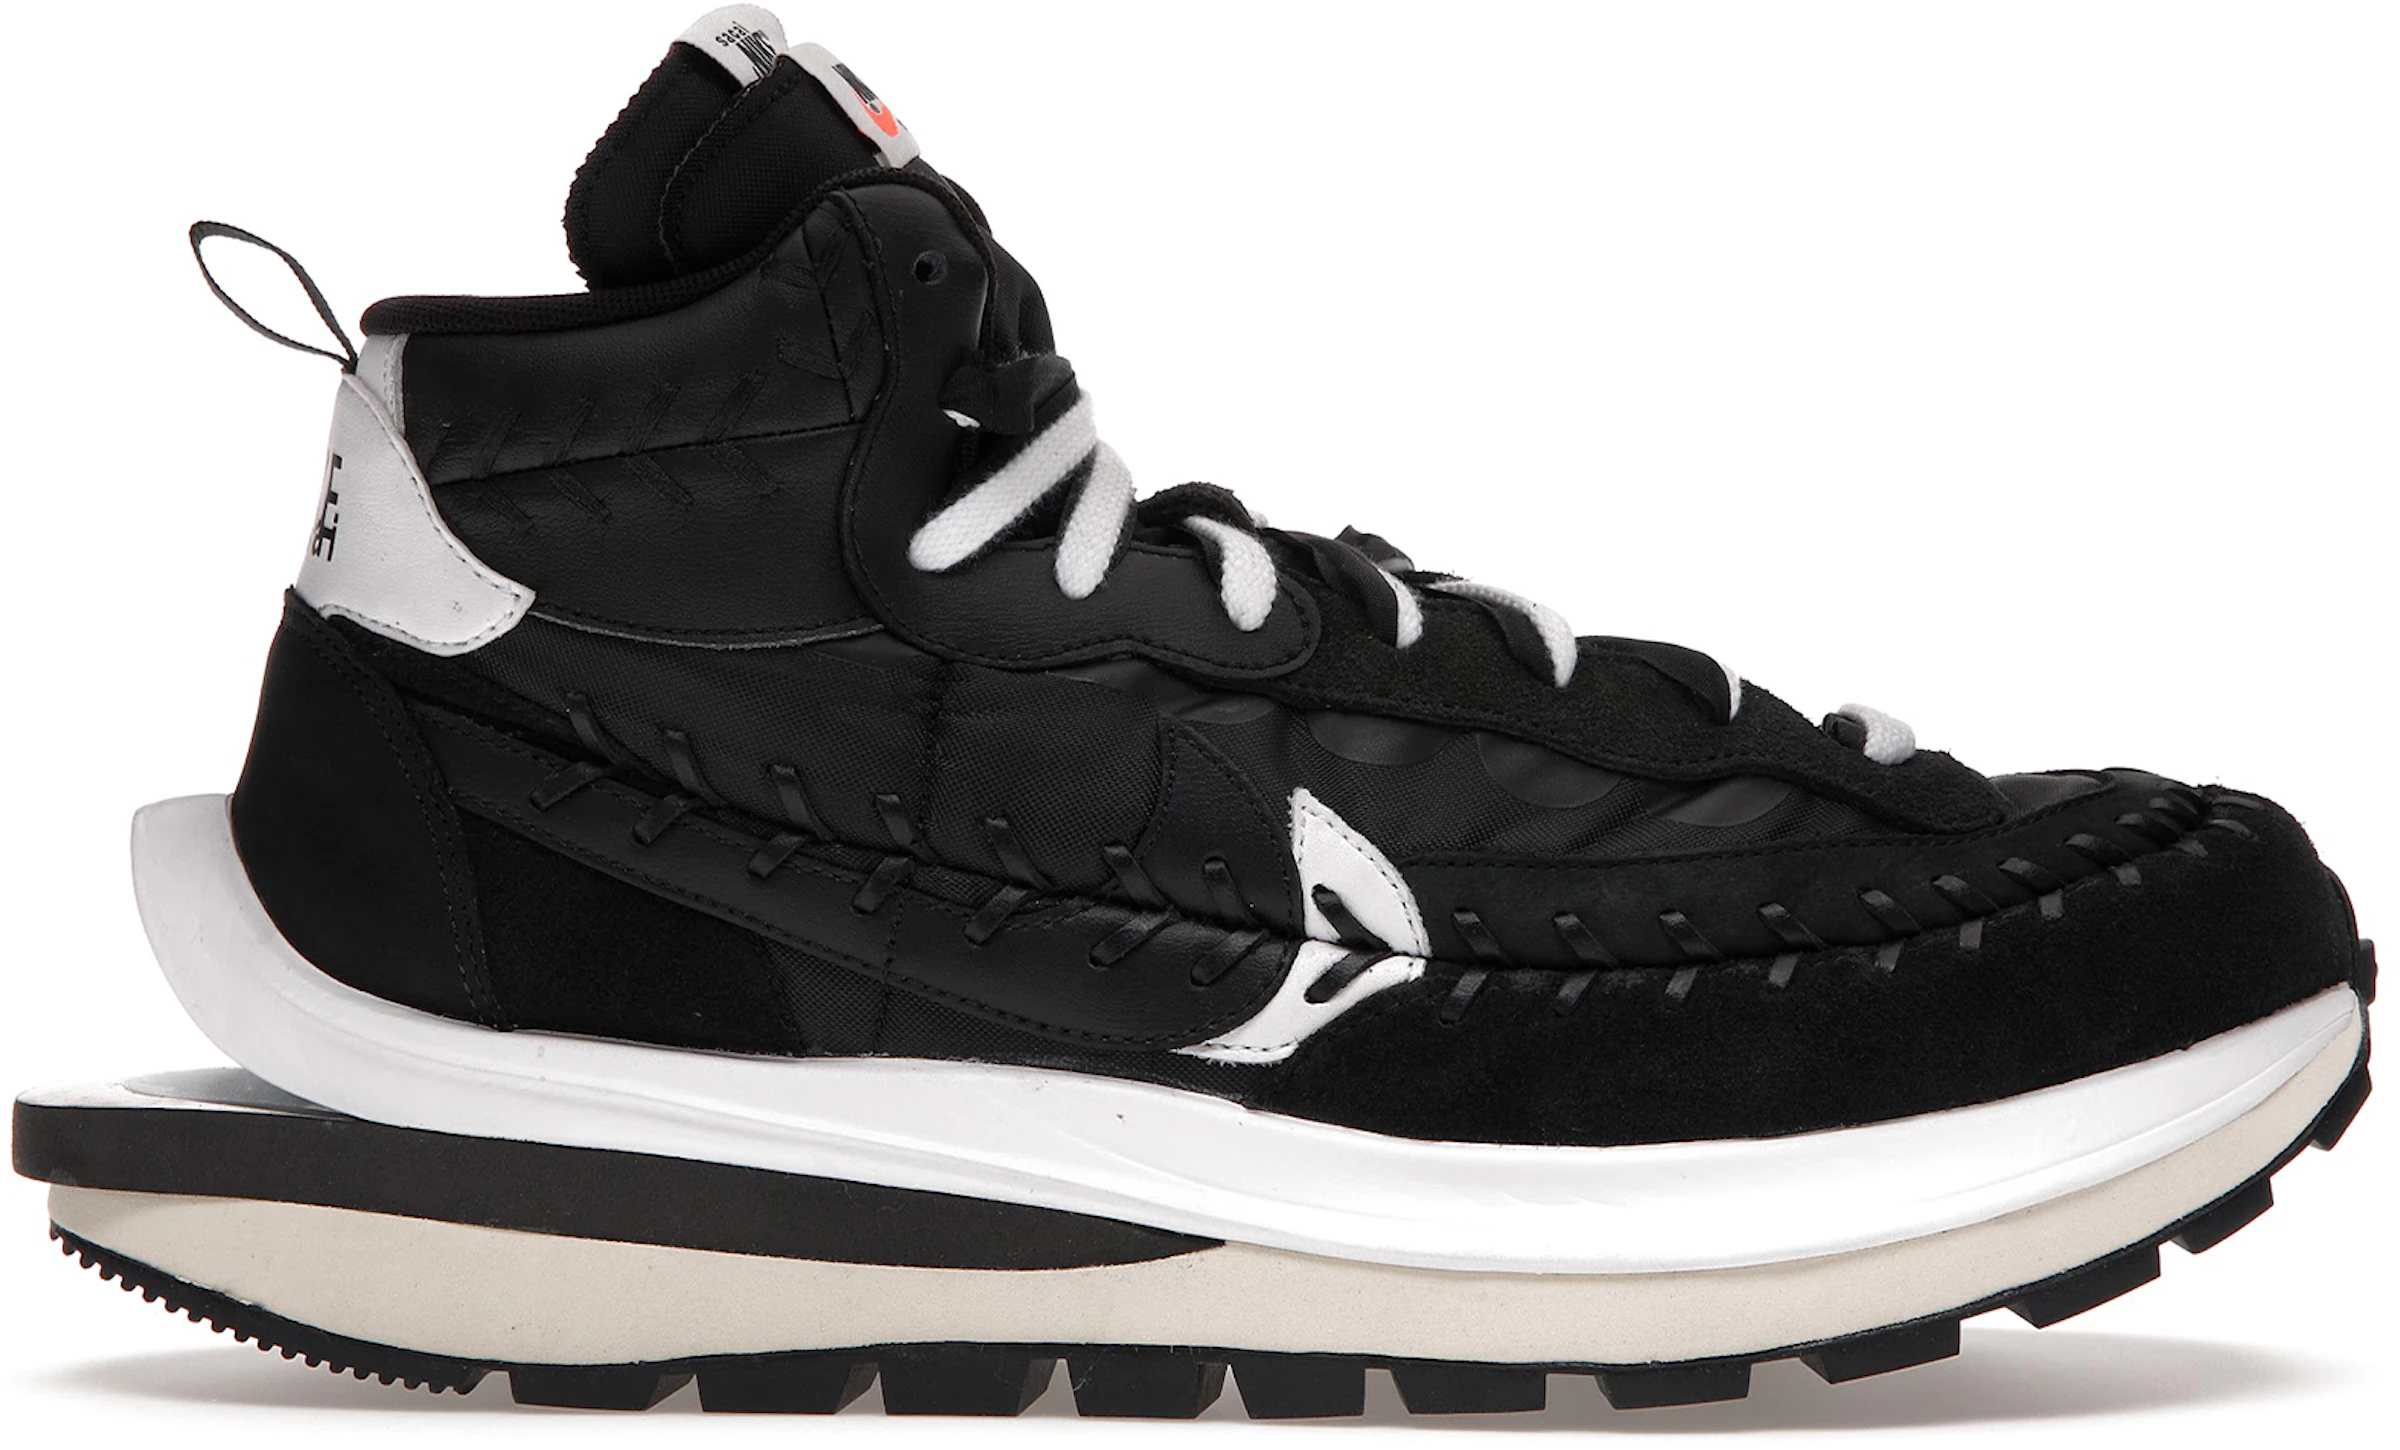 Nike Vaporwaffle sacai Paul Gaultier Black White - DH9186-001 - US